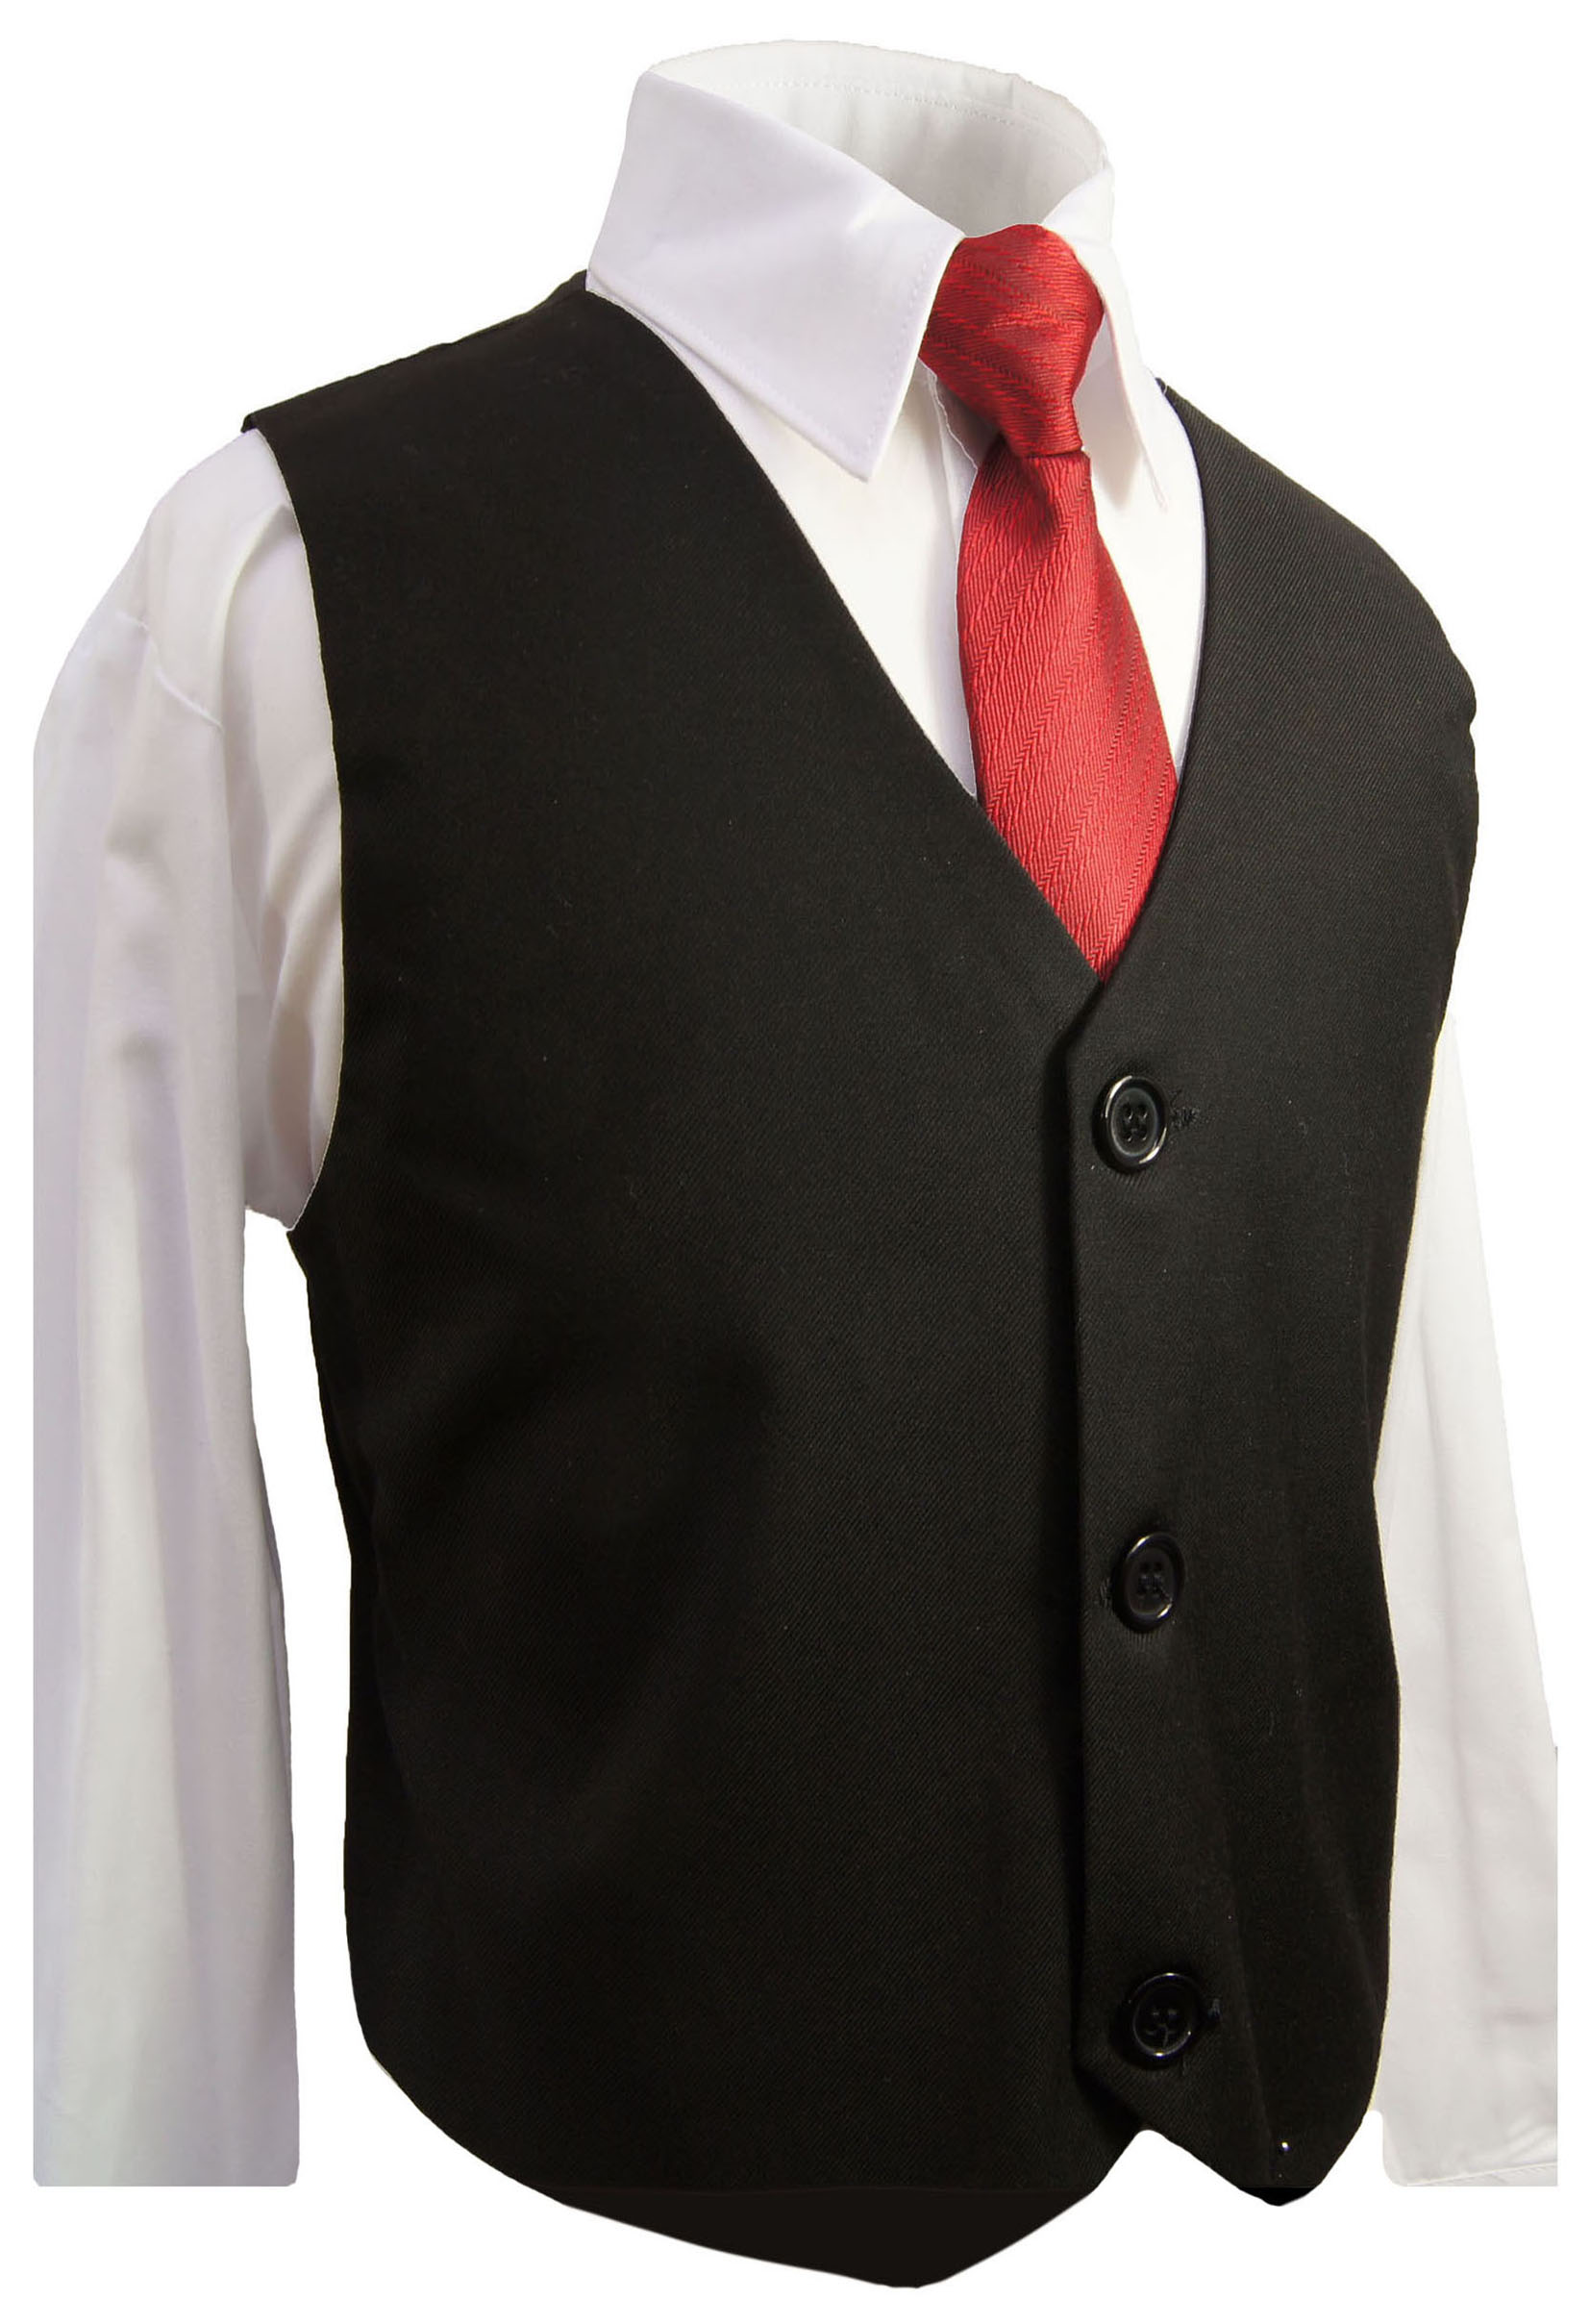 New Men's Formal Vest Tuxedo Waistcoat_Black White Dots Necktie & Hankie set